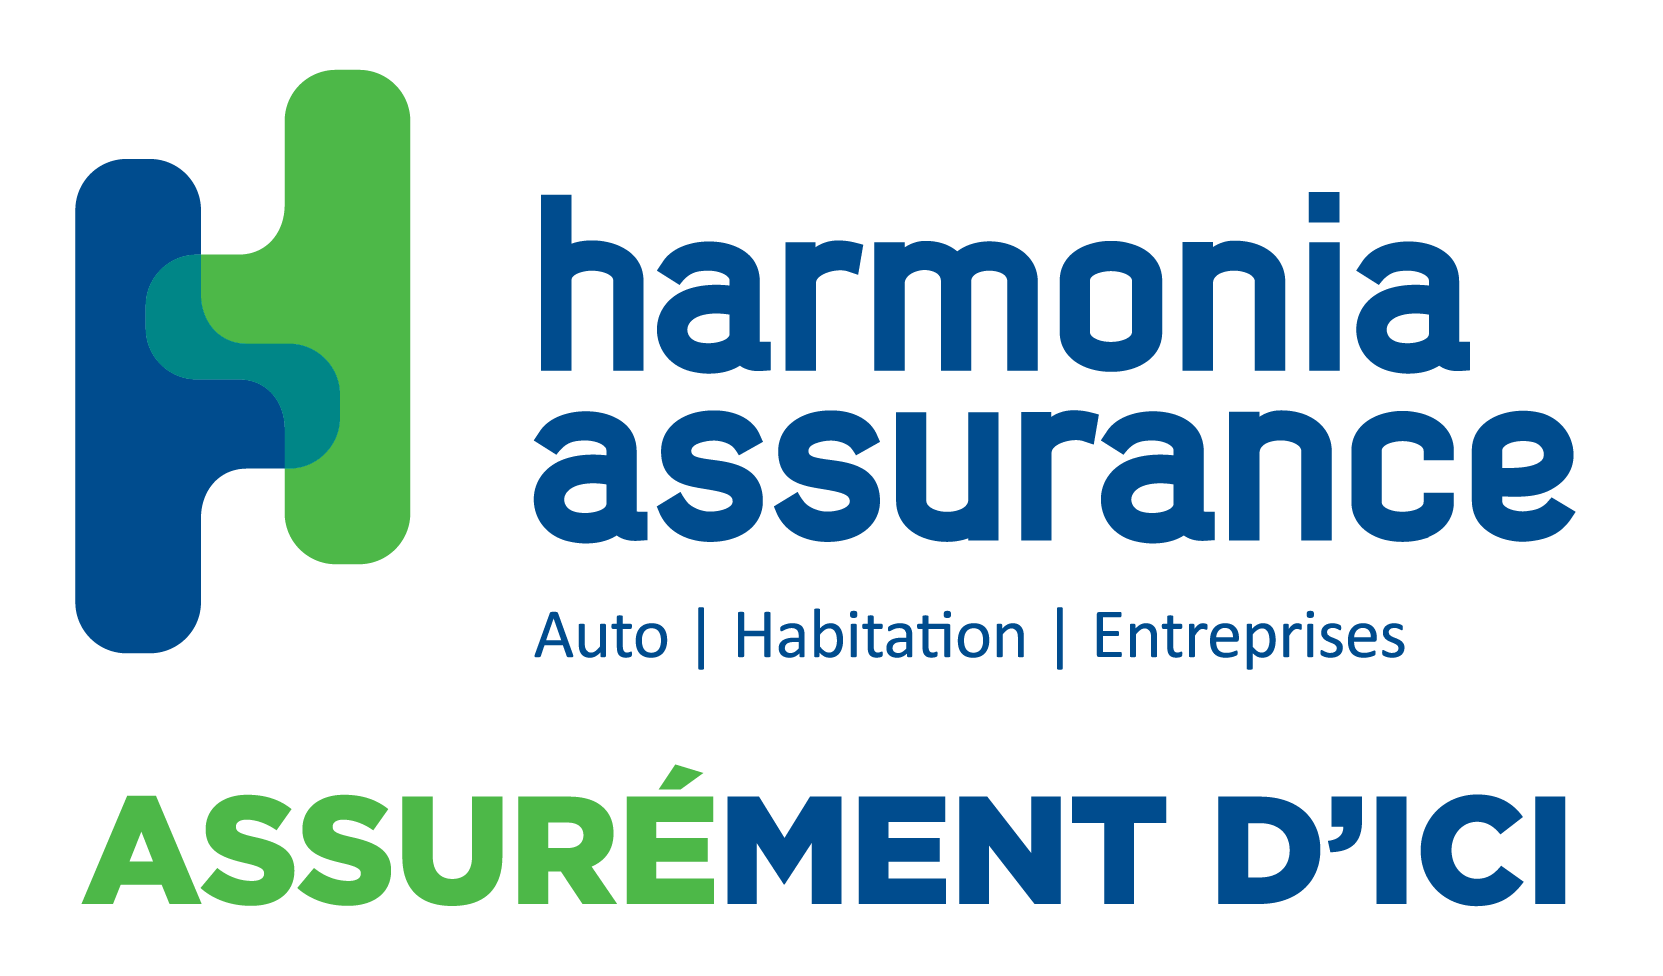 Harmonia assurance